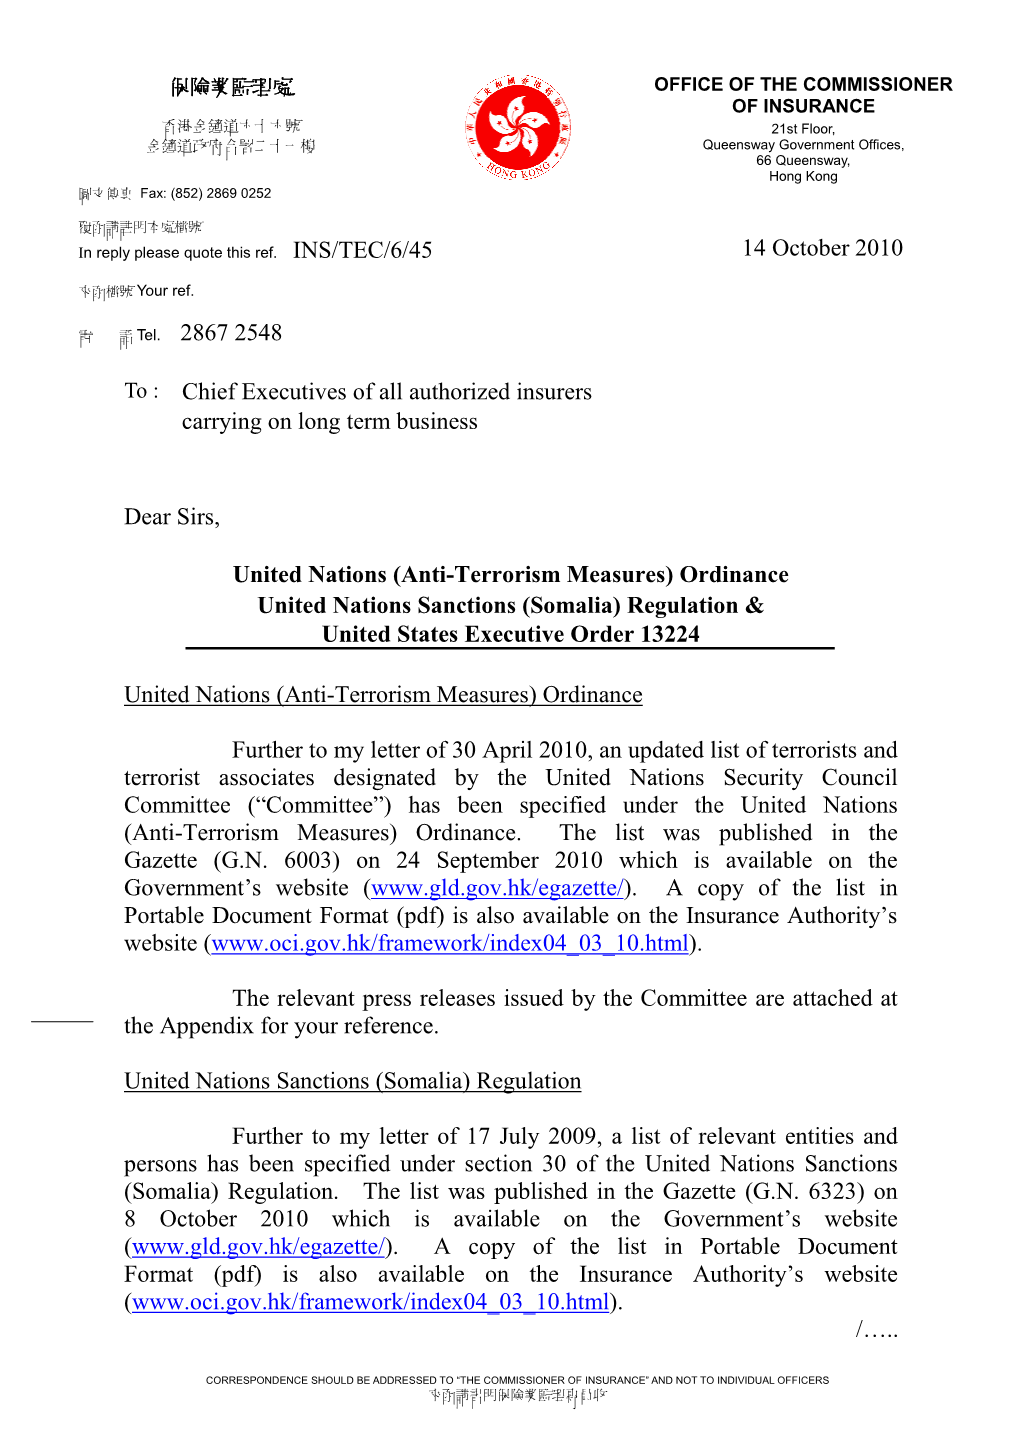 (Anti-Terrorism Measures) Ordinance United Nations Sanctions (Somalia) Regulation & United States Executive Order 13224